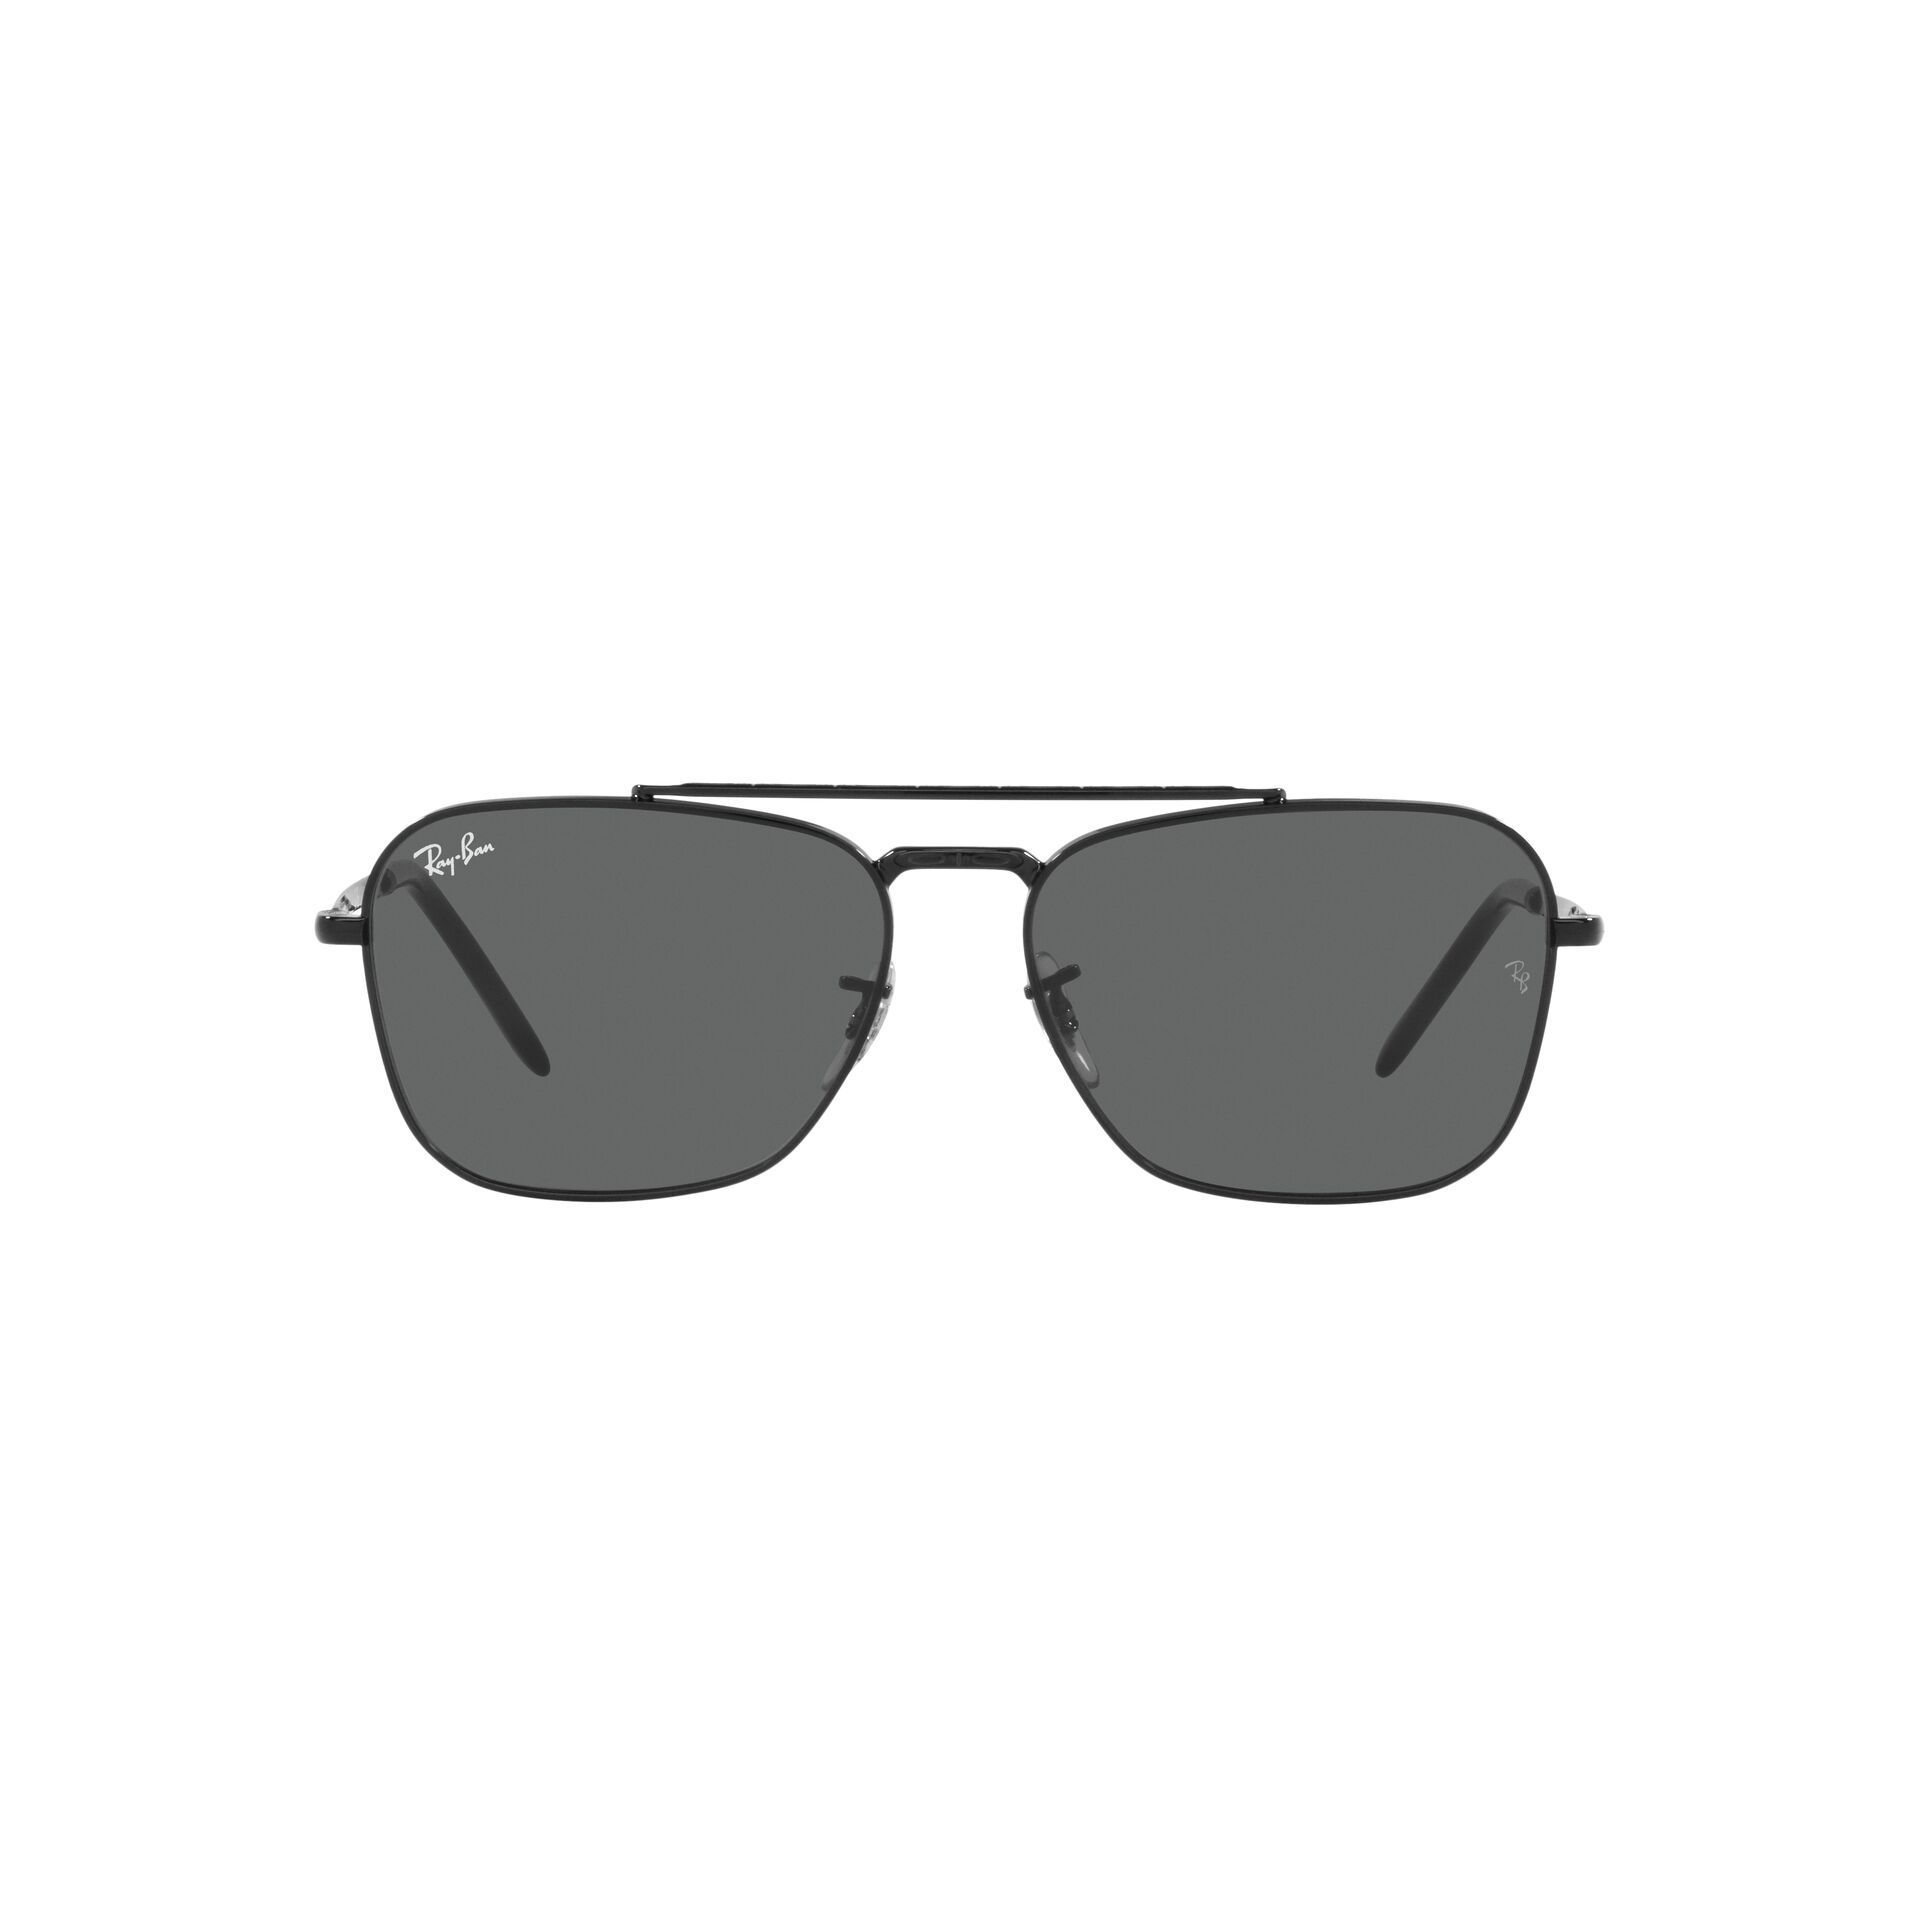 RB3636 Square Sunglasses 002 B1 - size 58